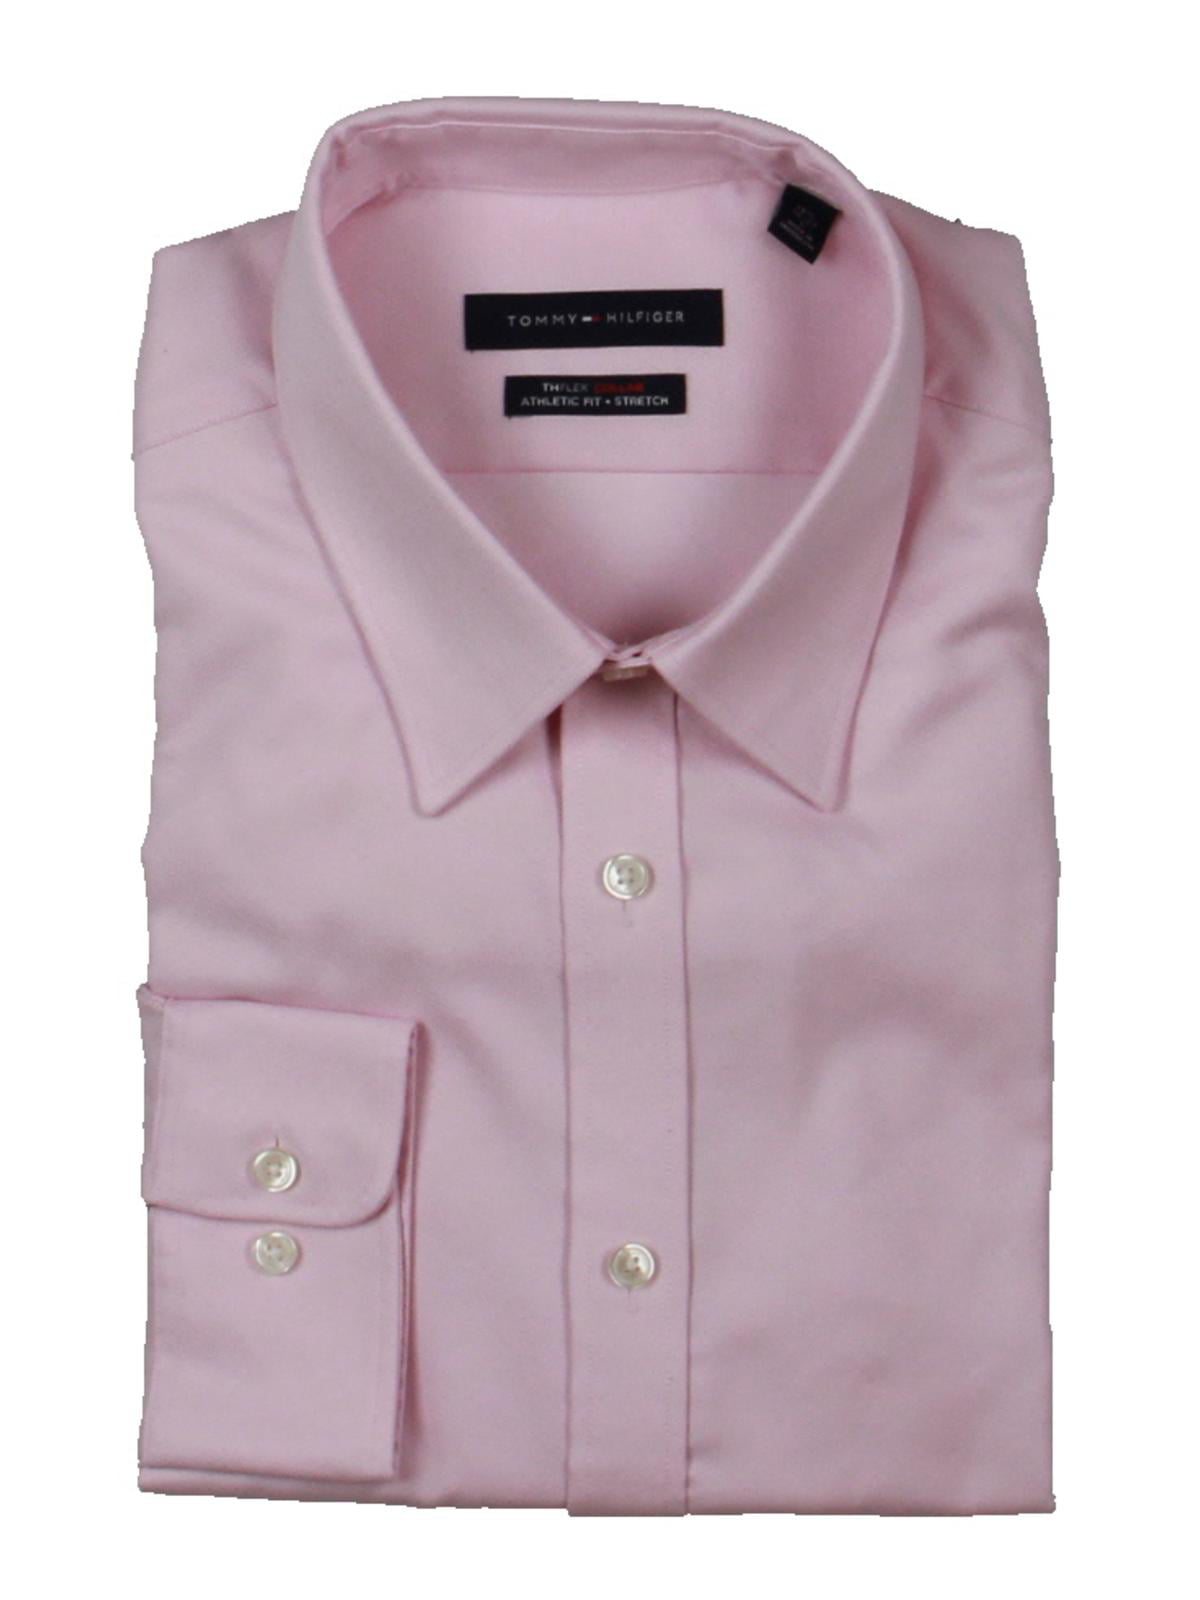 Tommy Hilfiger Mens Stretch Athletic Fit Dress Shirt Pink L - Walmart.com